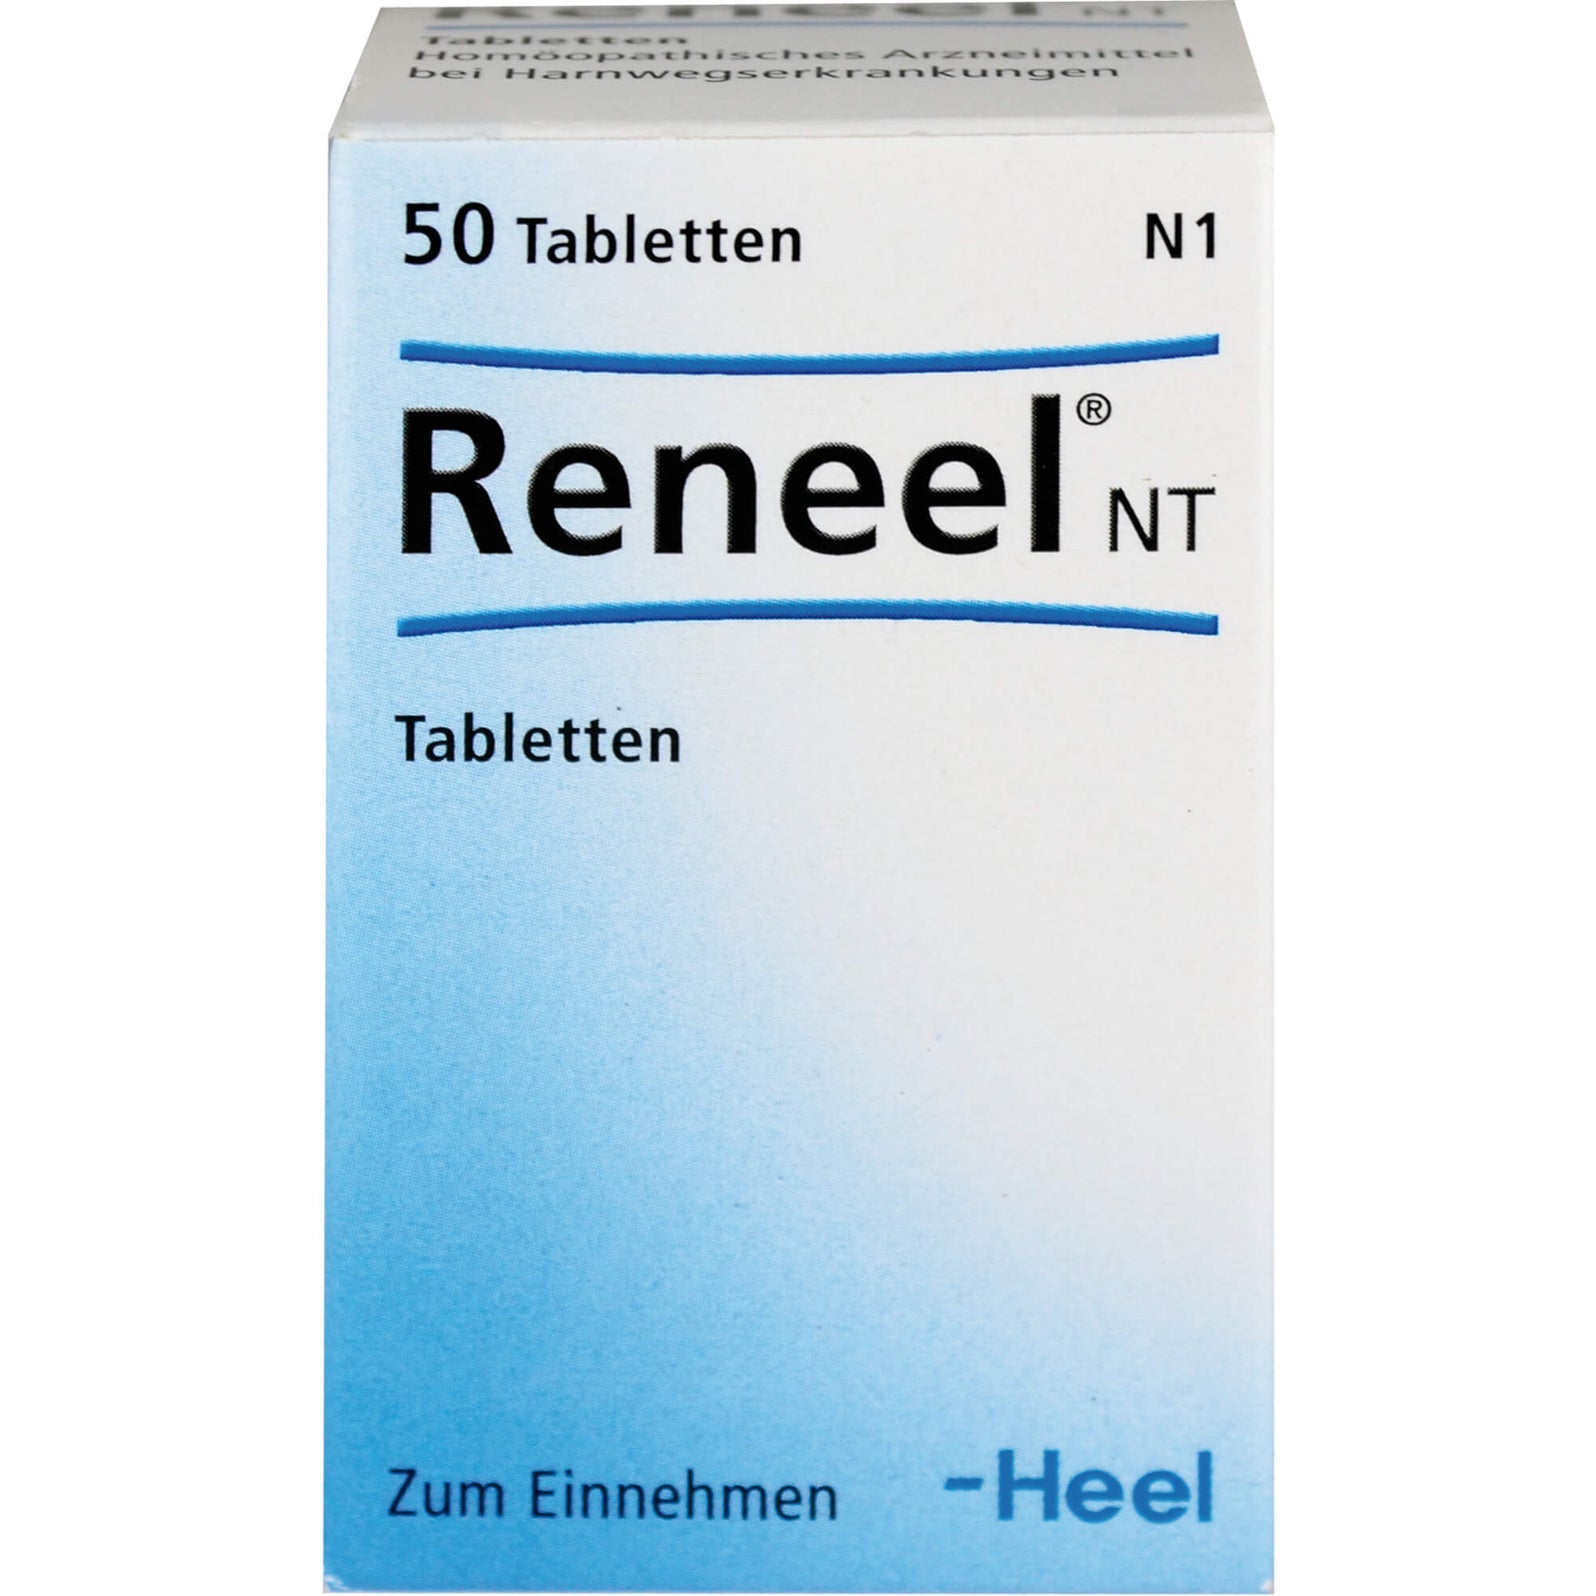 Heel Reneel NT Homeopathic Tablets (50)